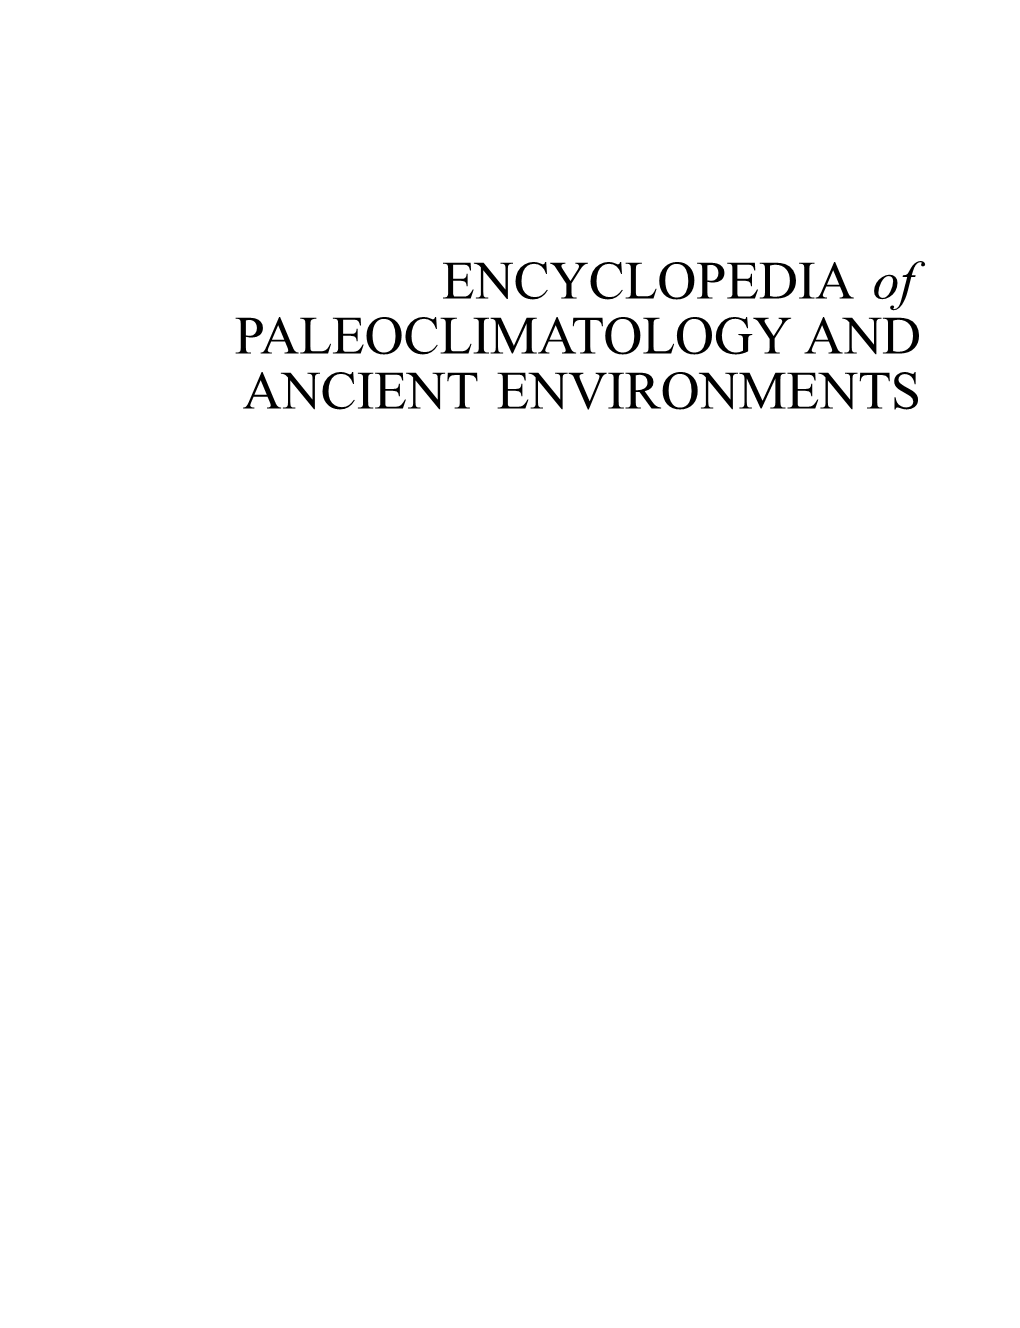 ENCYCLOPEDIA of PALEOCLIMATOLOGY and ANCIENT ENVIRONMENTS Encyclopedia of Earth Sciences Series